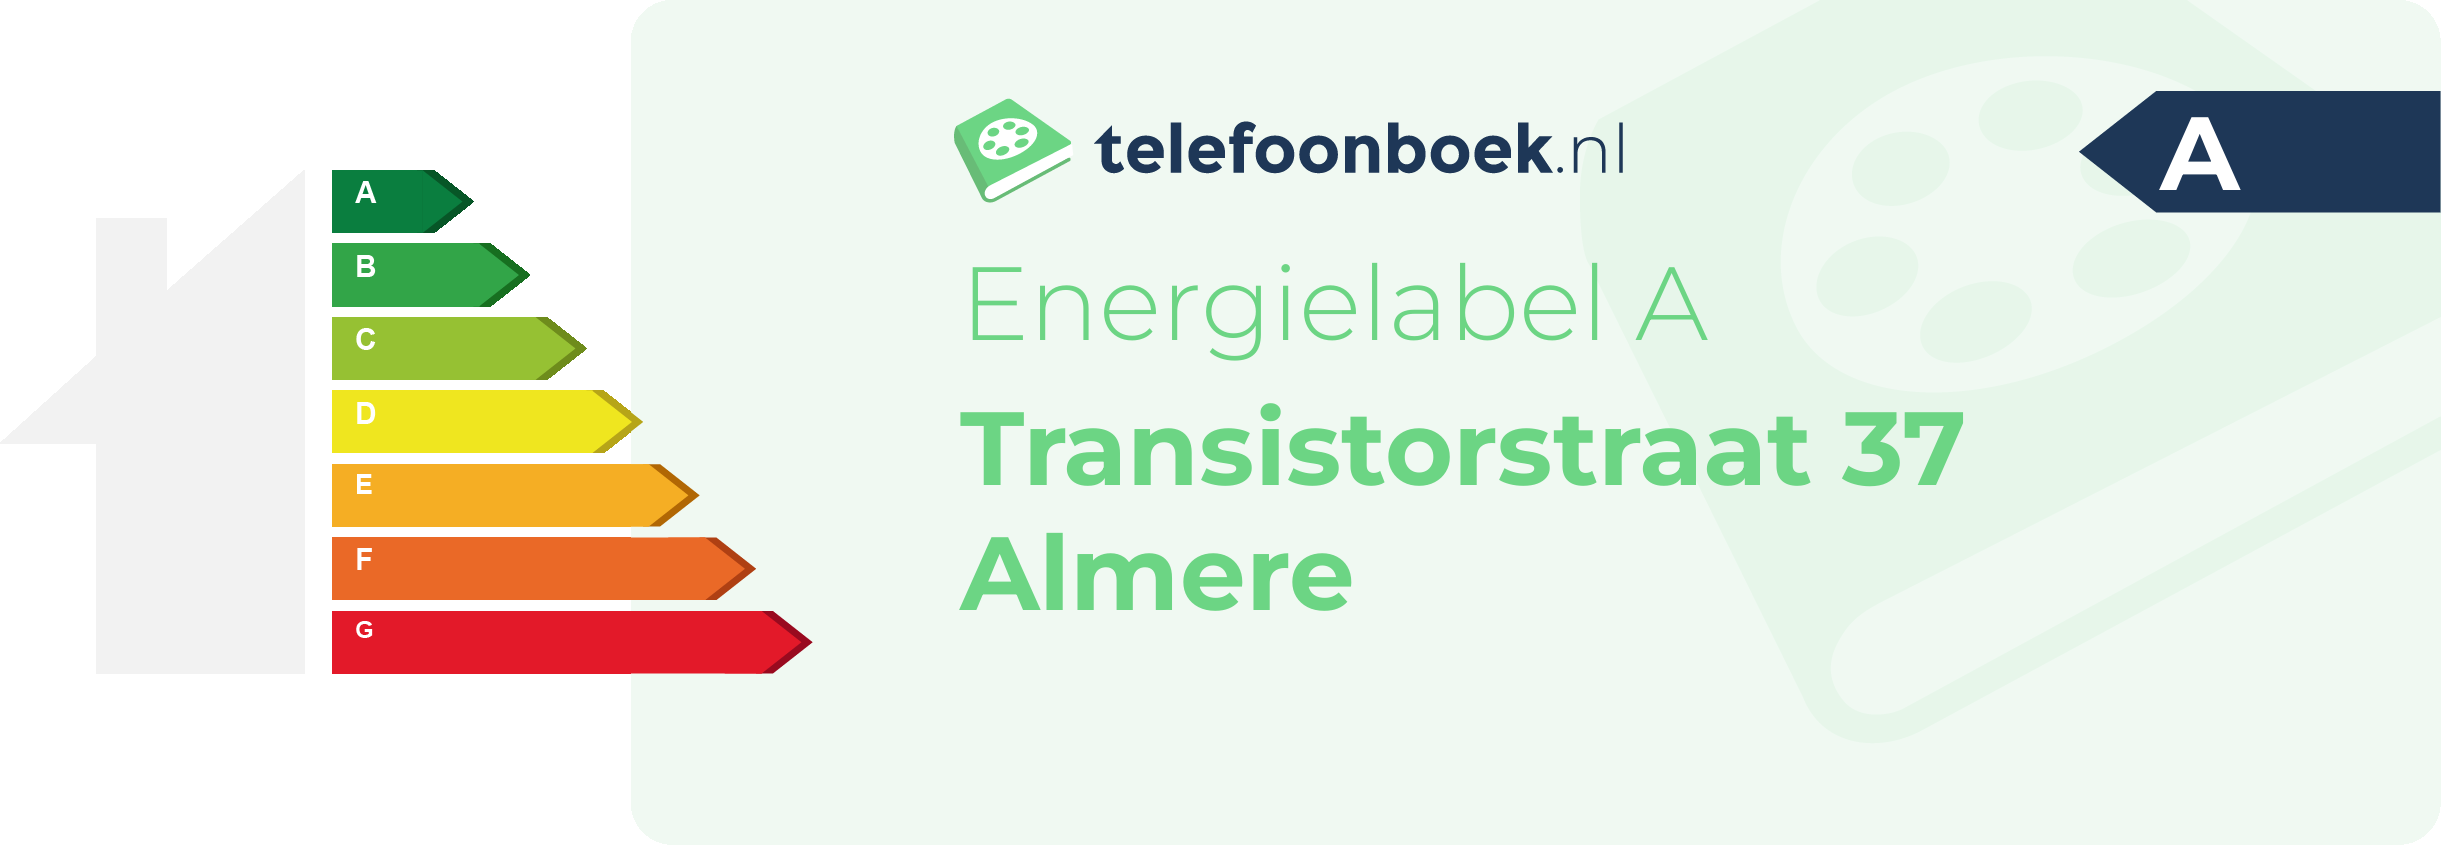 Energielabel Transistorstraat 37 Almere